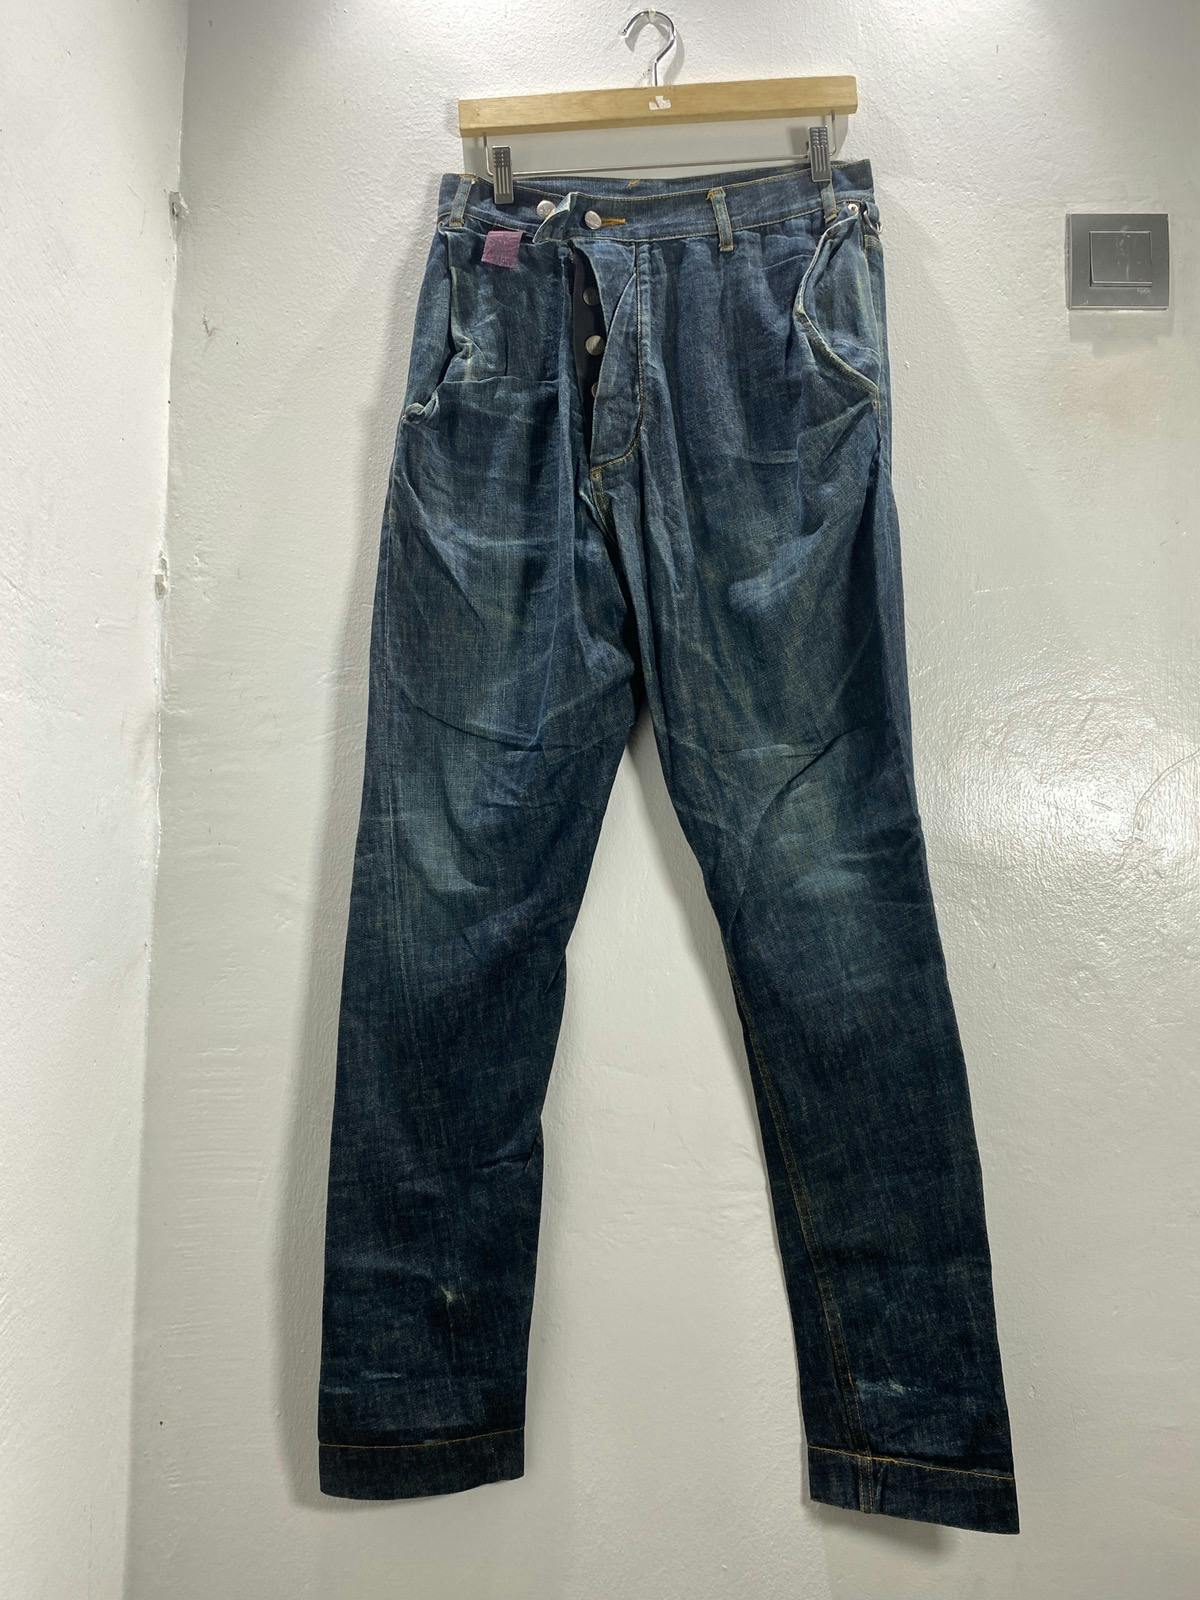 Vivienne Westwood Jeans - 1